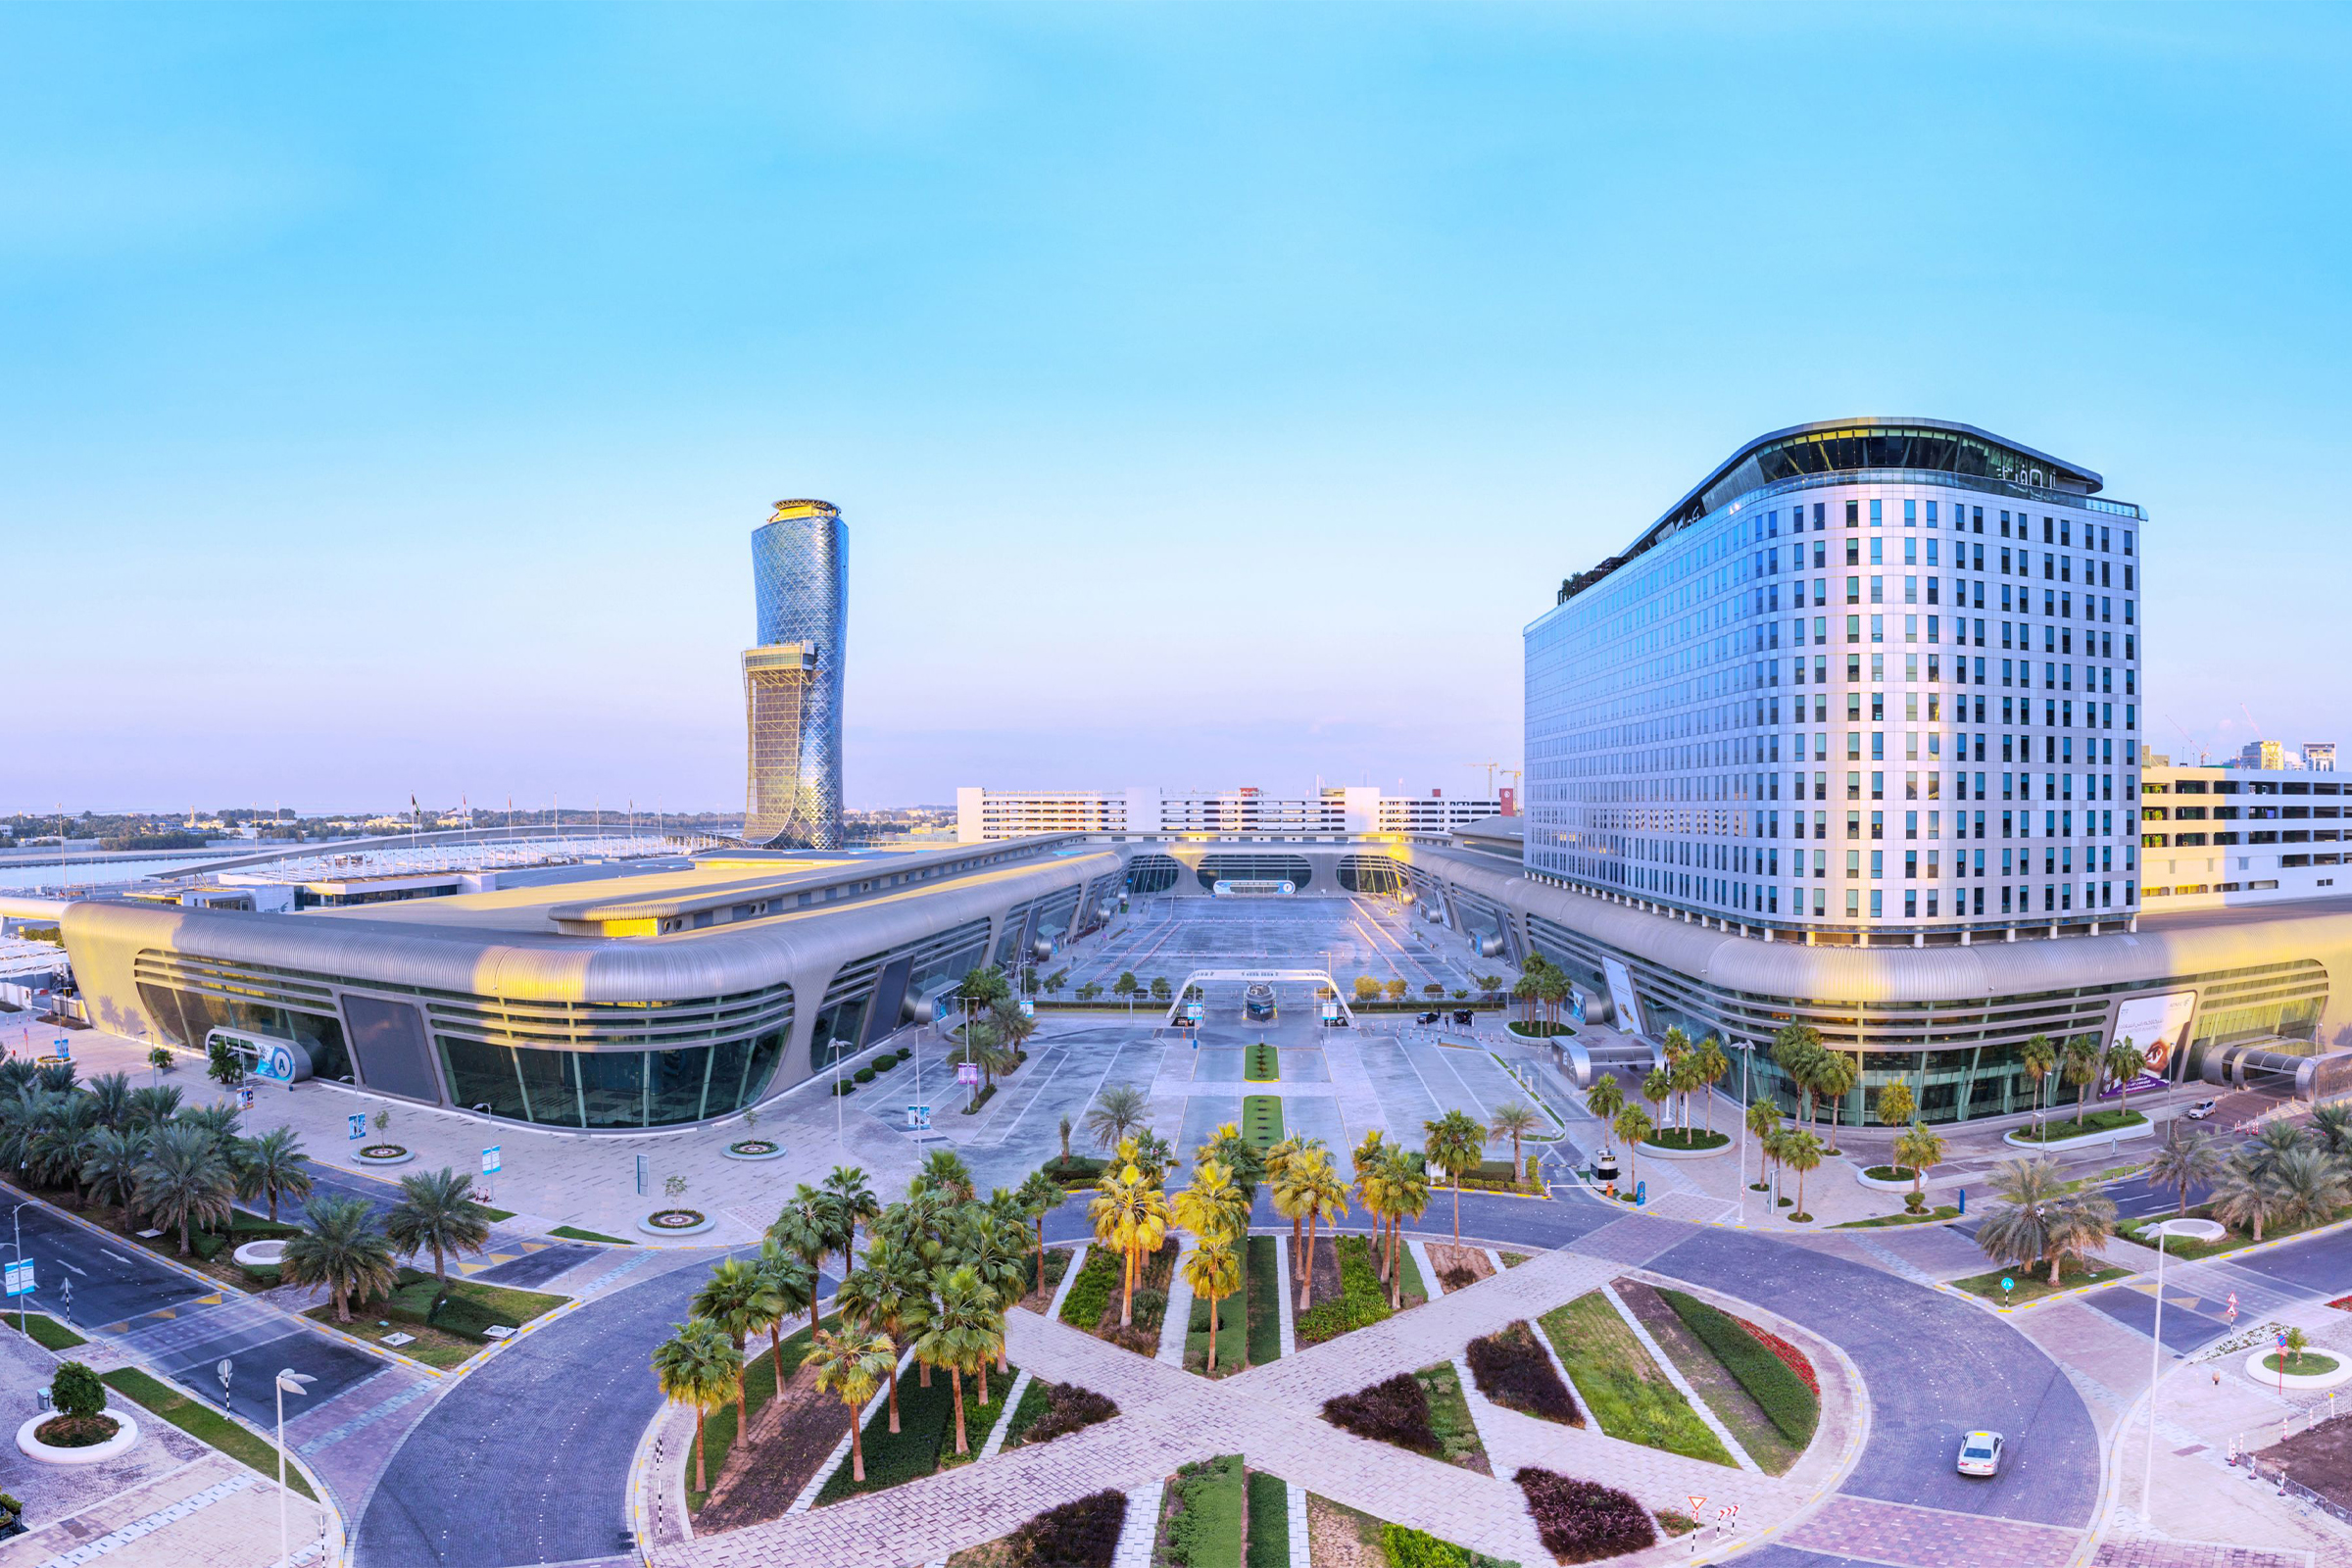 Abu Dhabi National Exhibition Centre, ADNEC